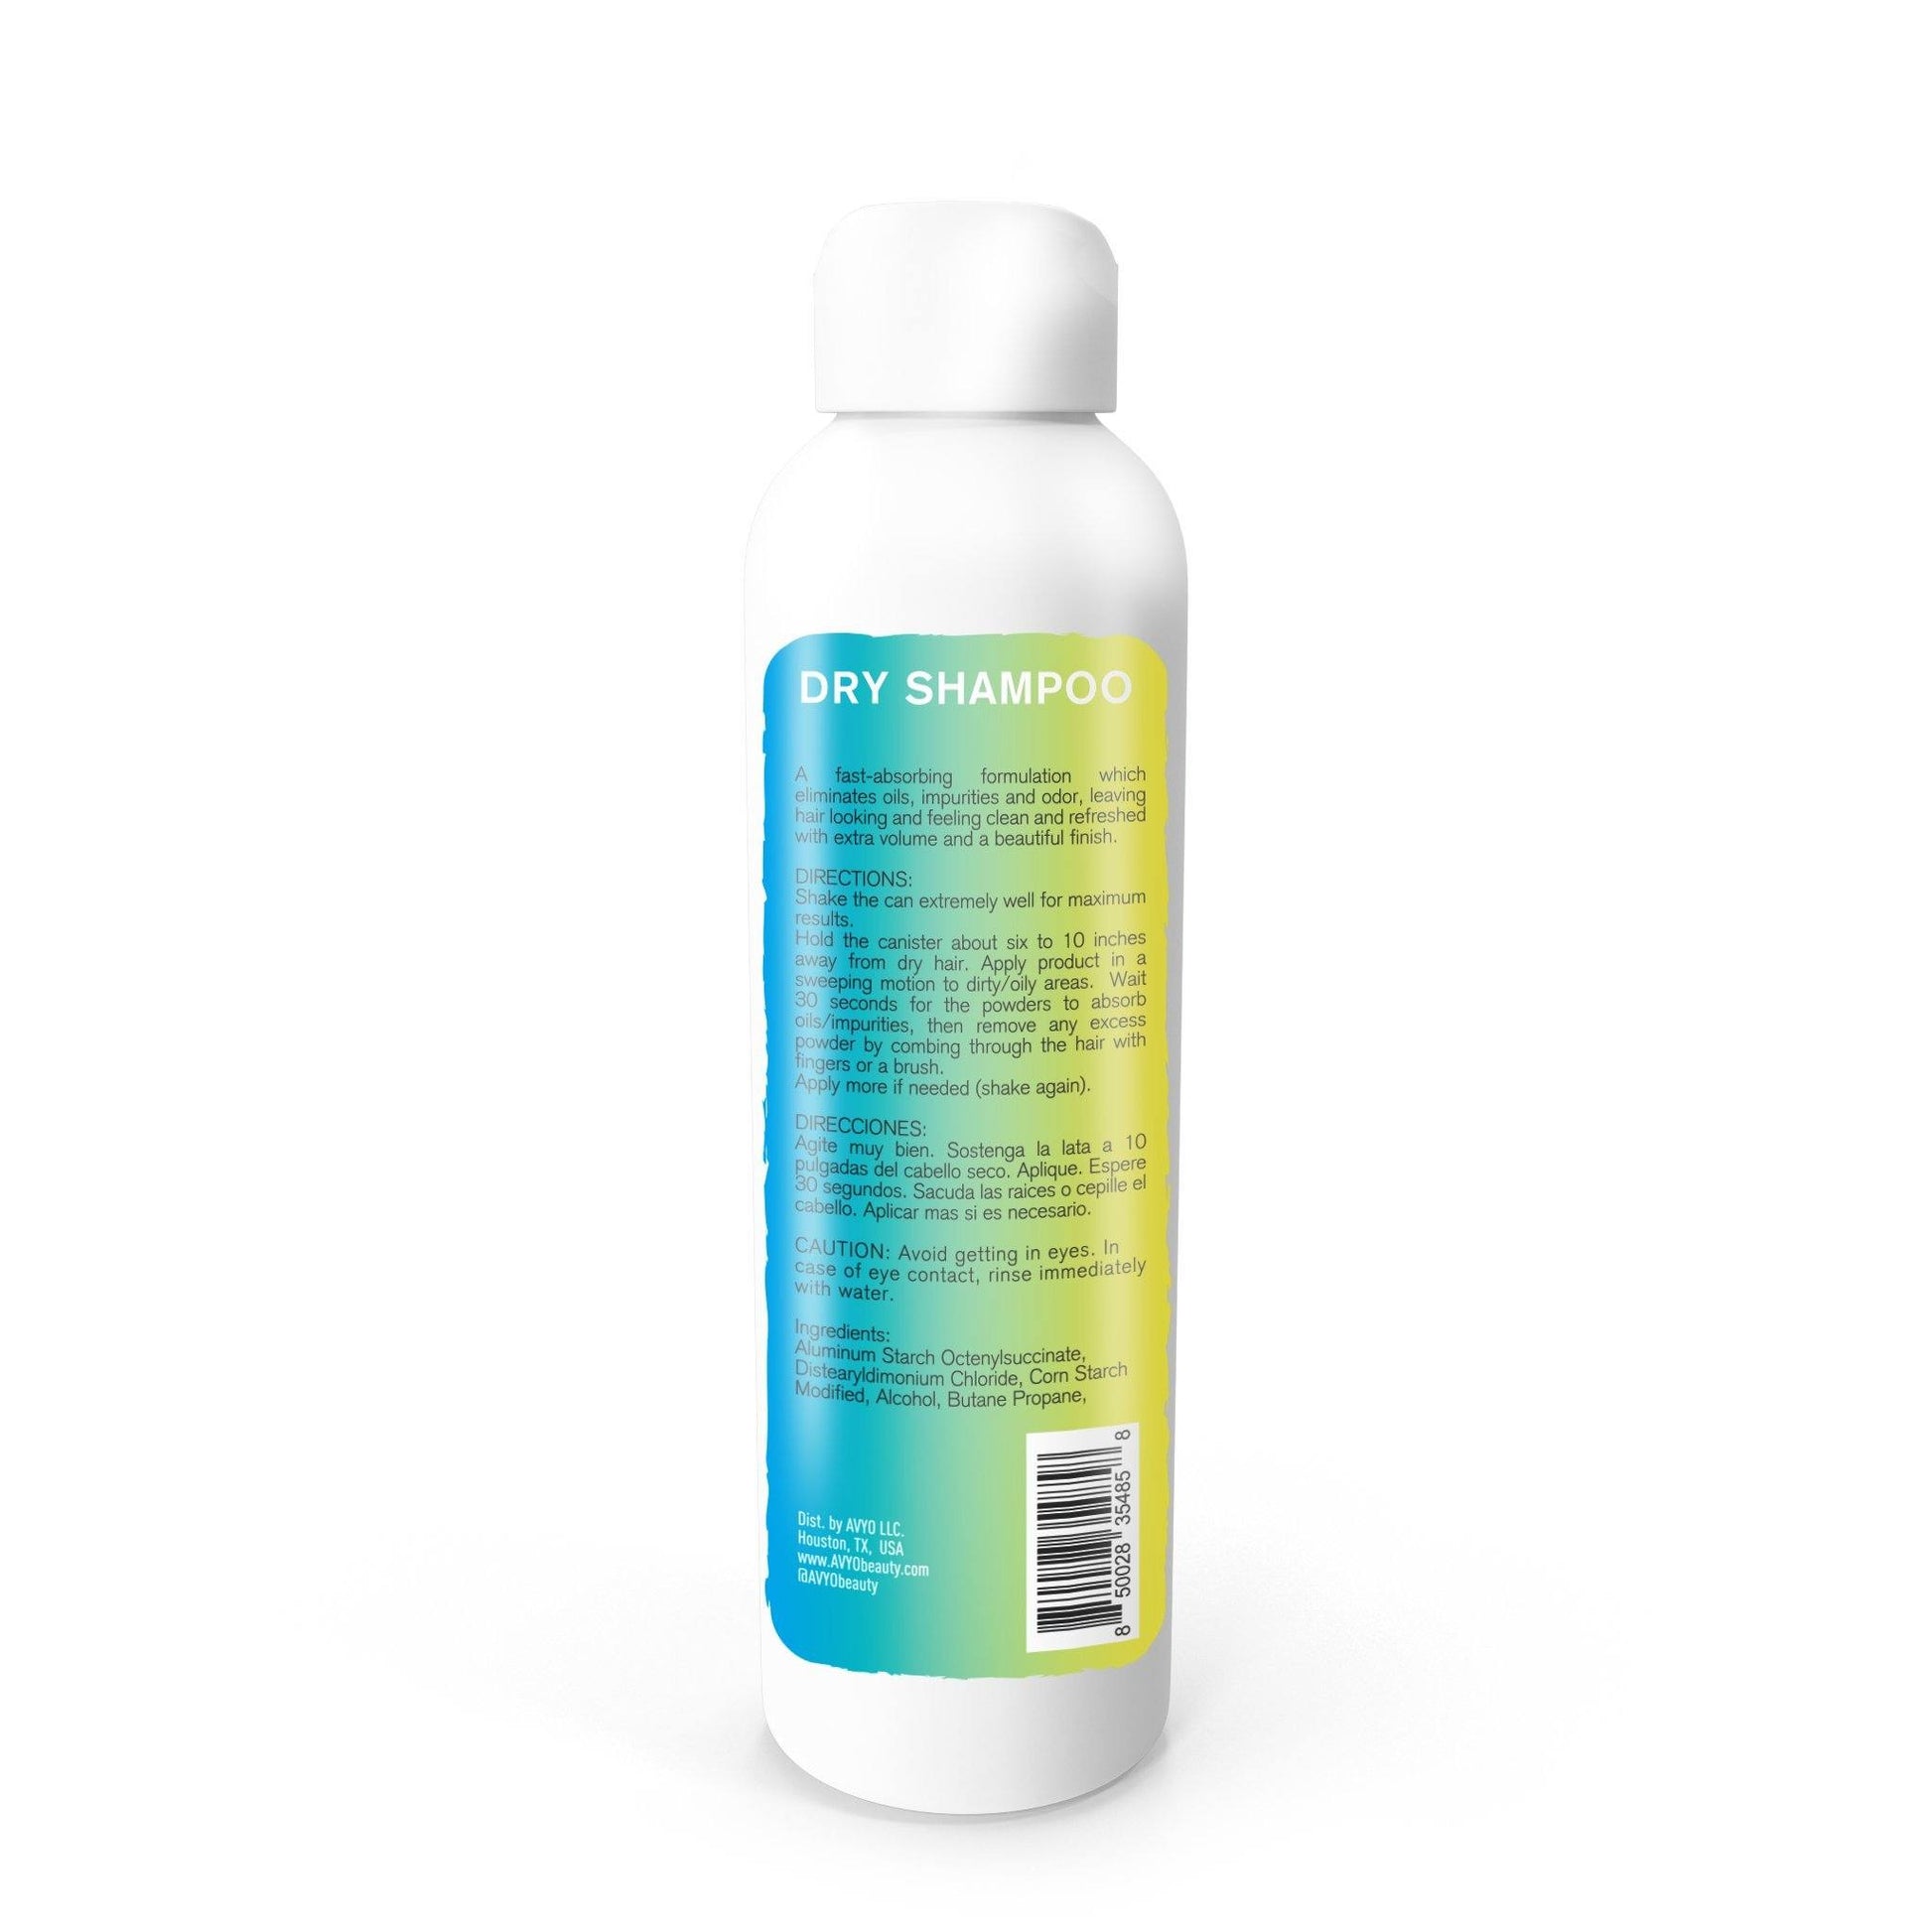 Dry Shampoo | Fast-Absorbing Formula Eliminates Oils, Odors and Impurities | AVYO HAIR STYLING PRODUCTS AVYO 